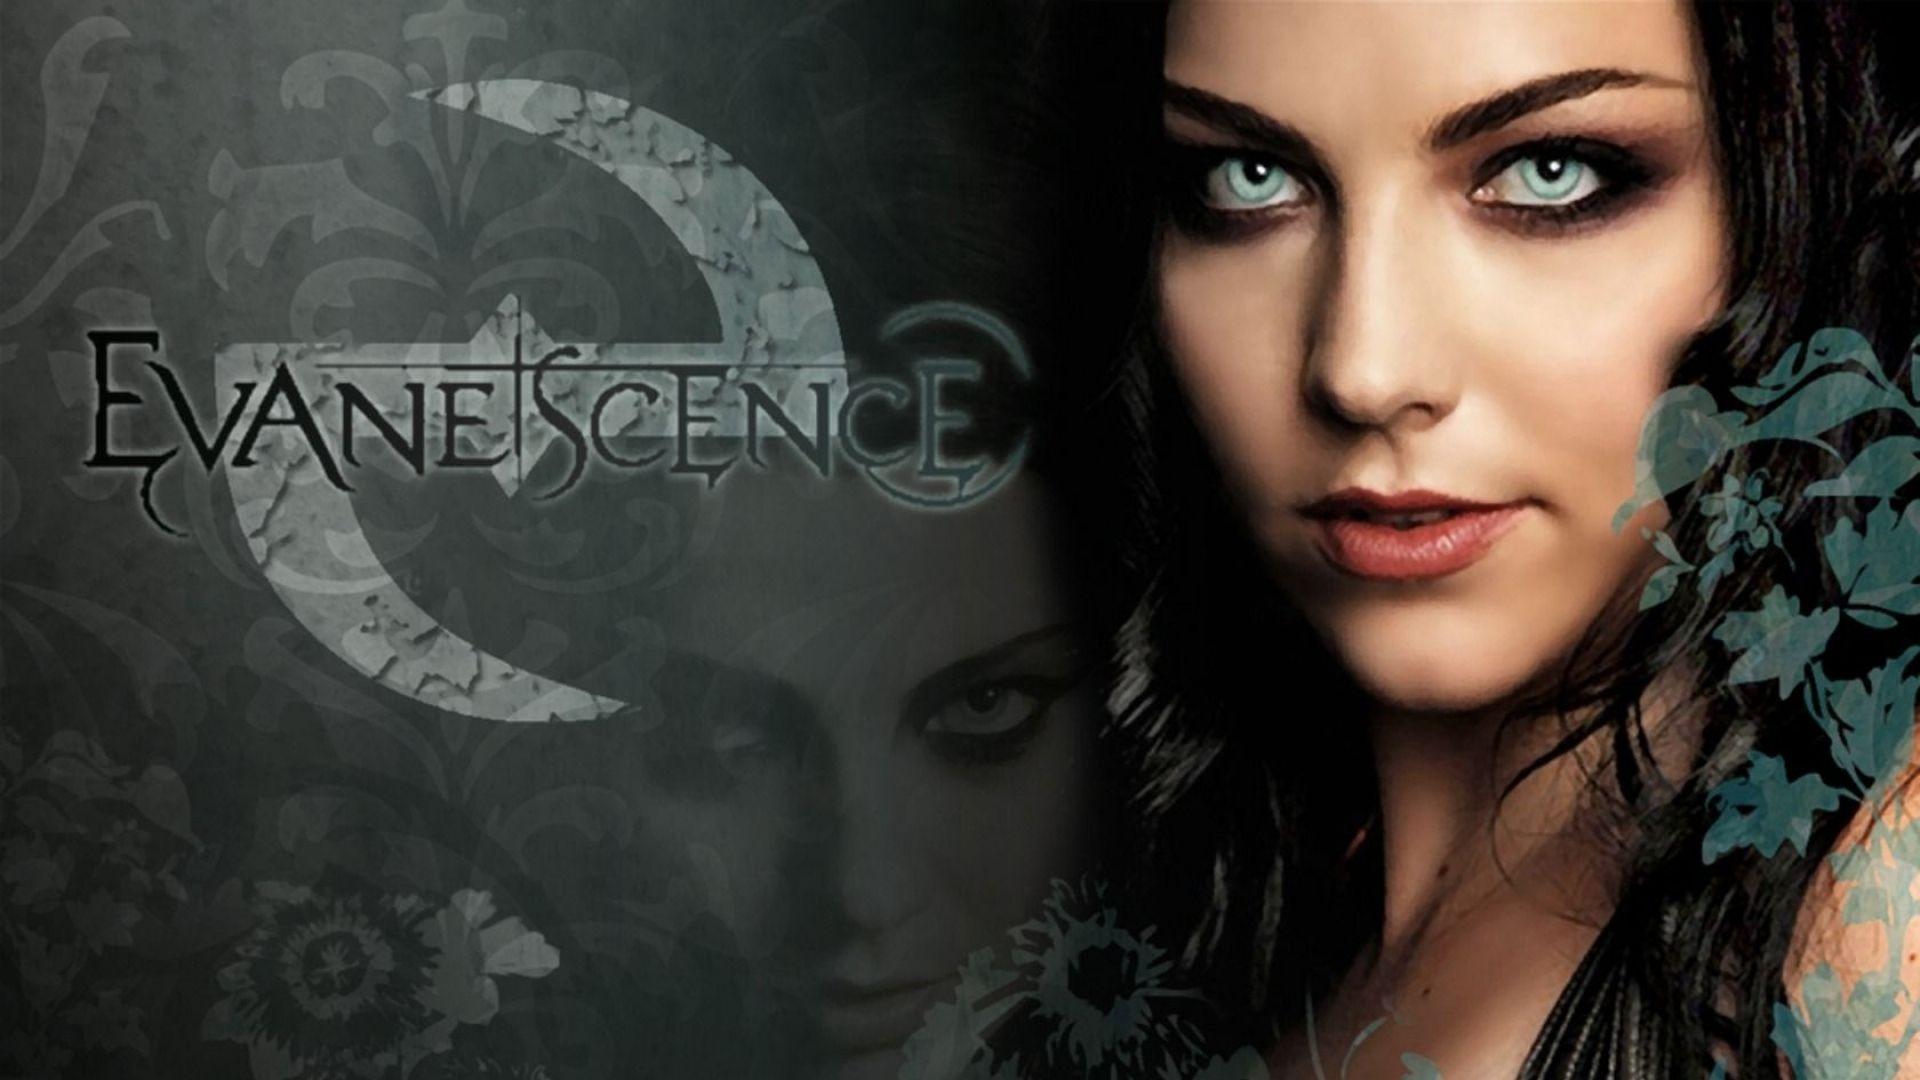 Wiki Evanescence